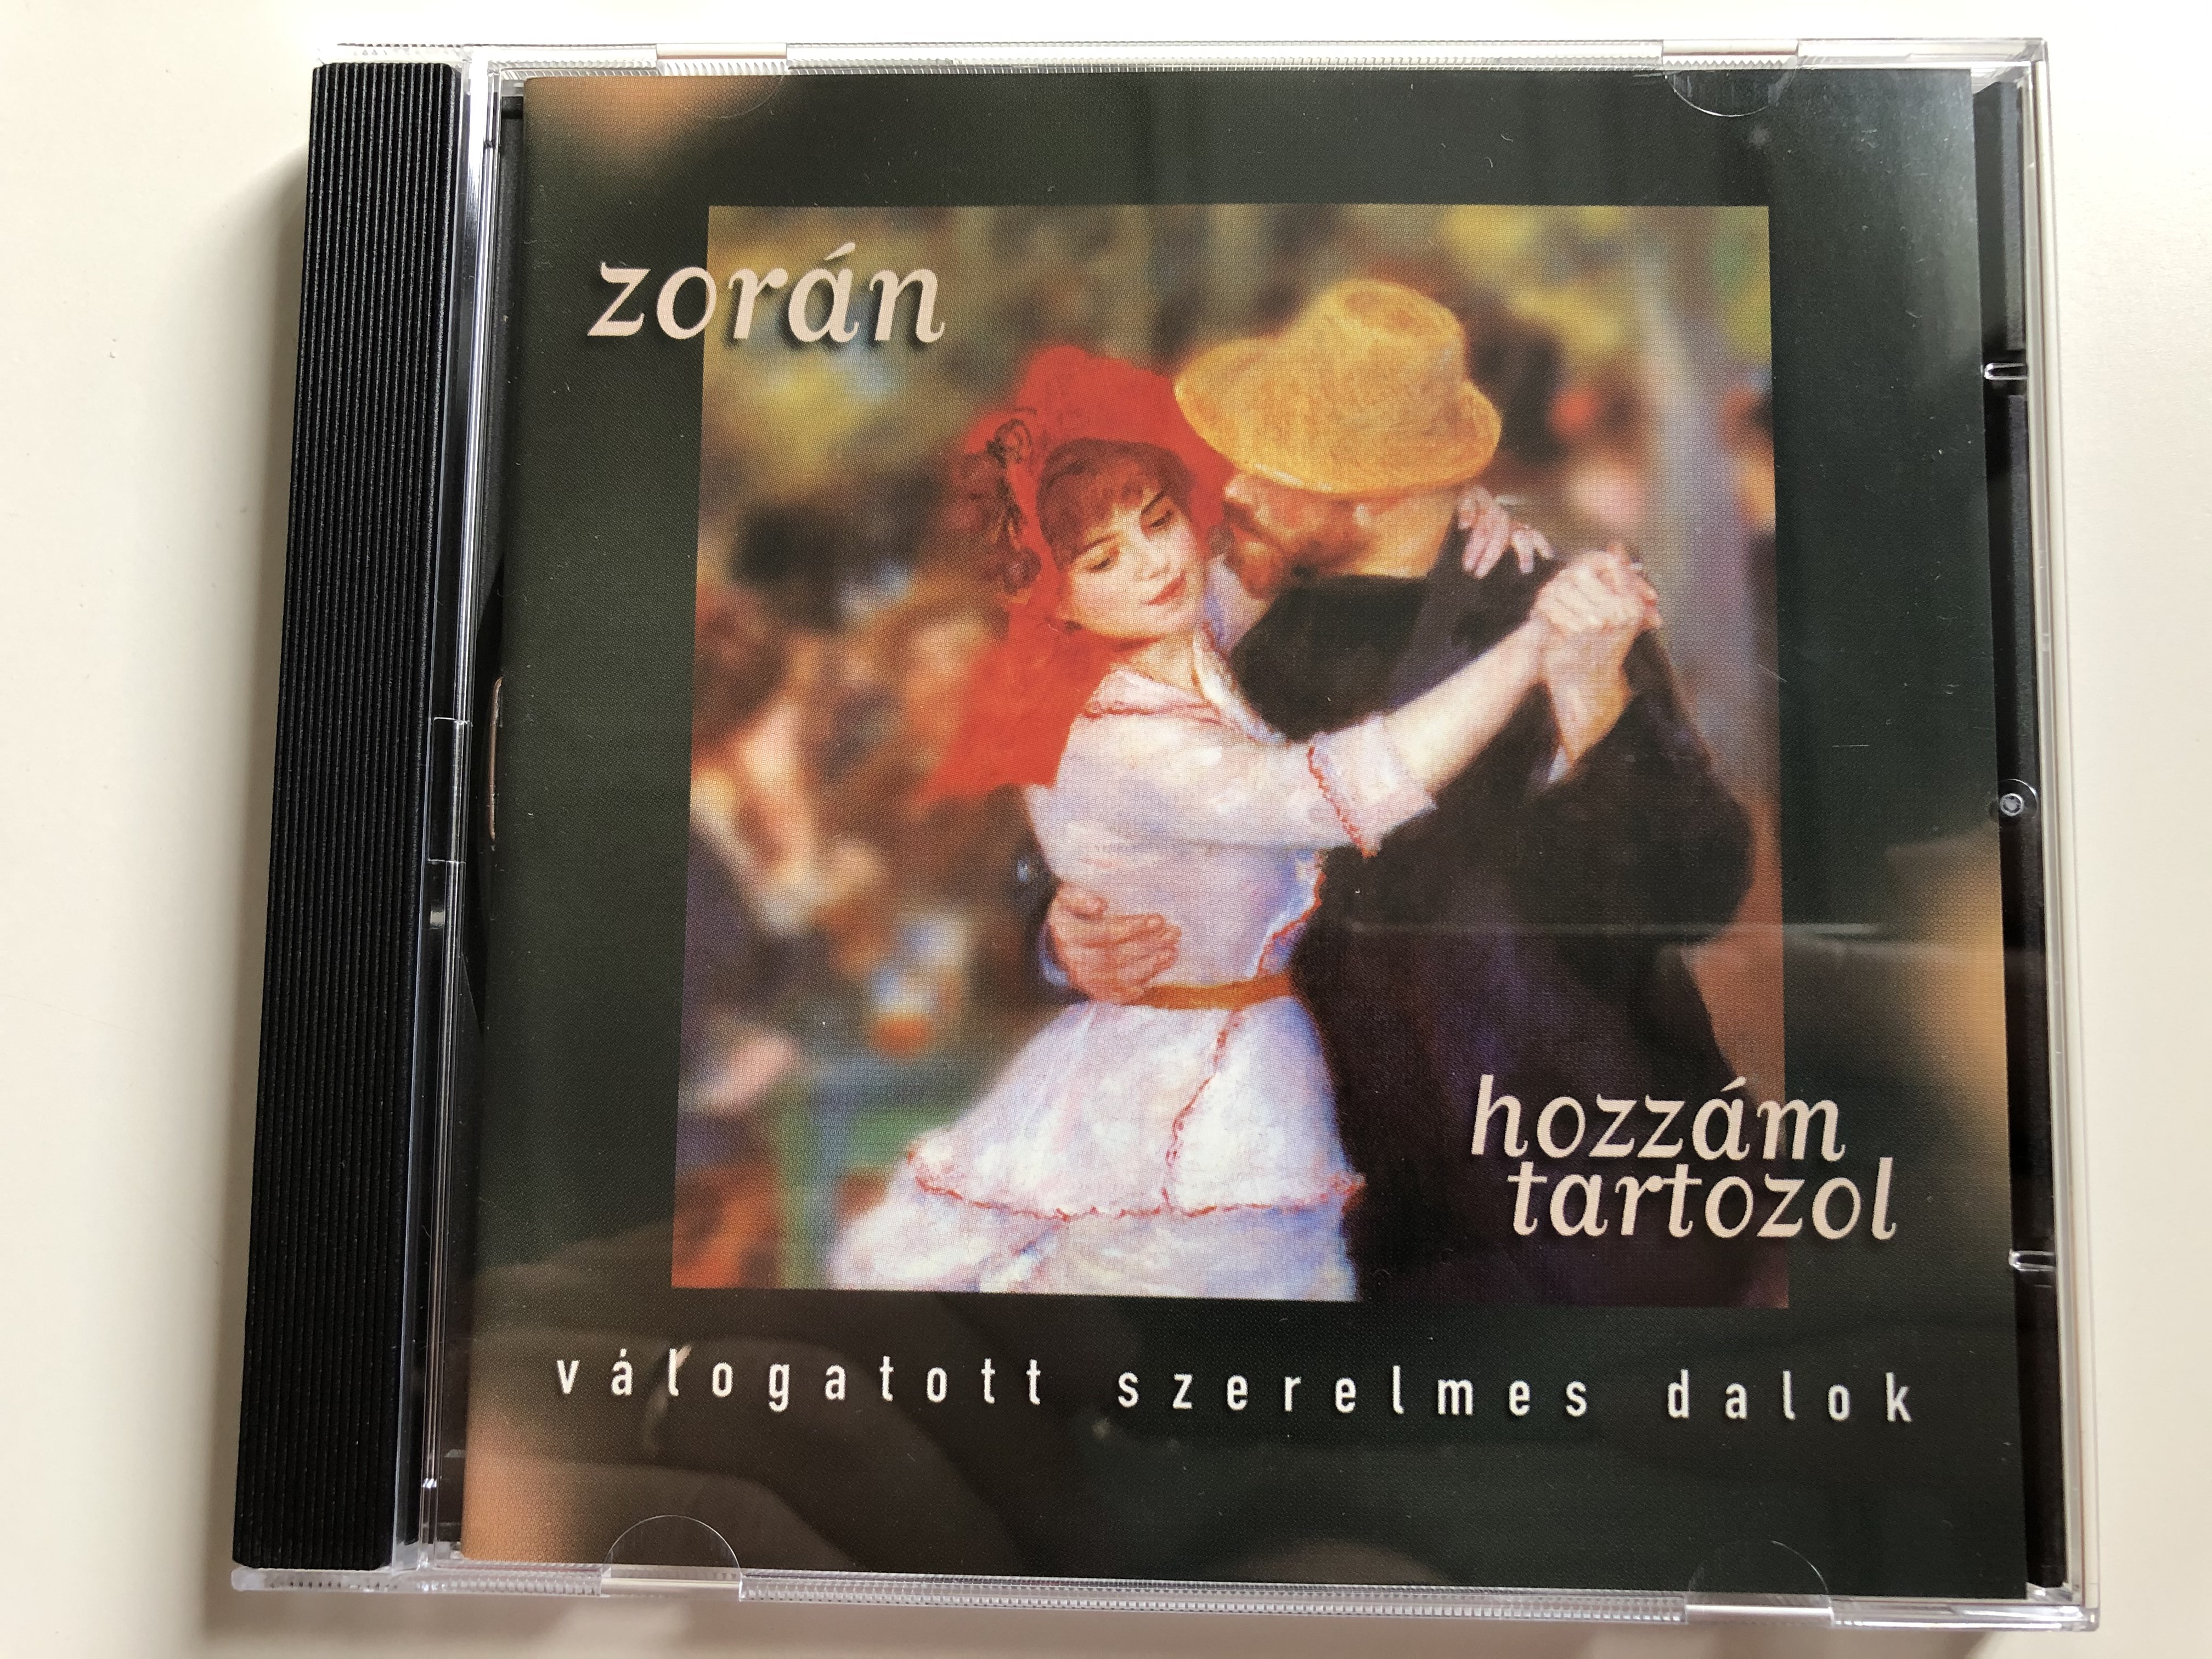 zor-n-hozz-m-tartozol-v-logatott-szerelmes-dalok-3t-audio-cd-1998-559-813-2-1-.jpg